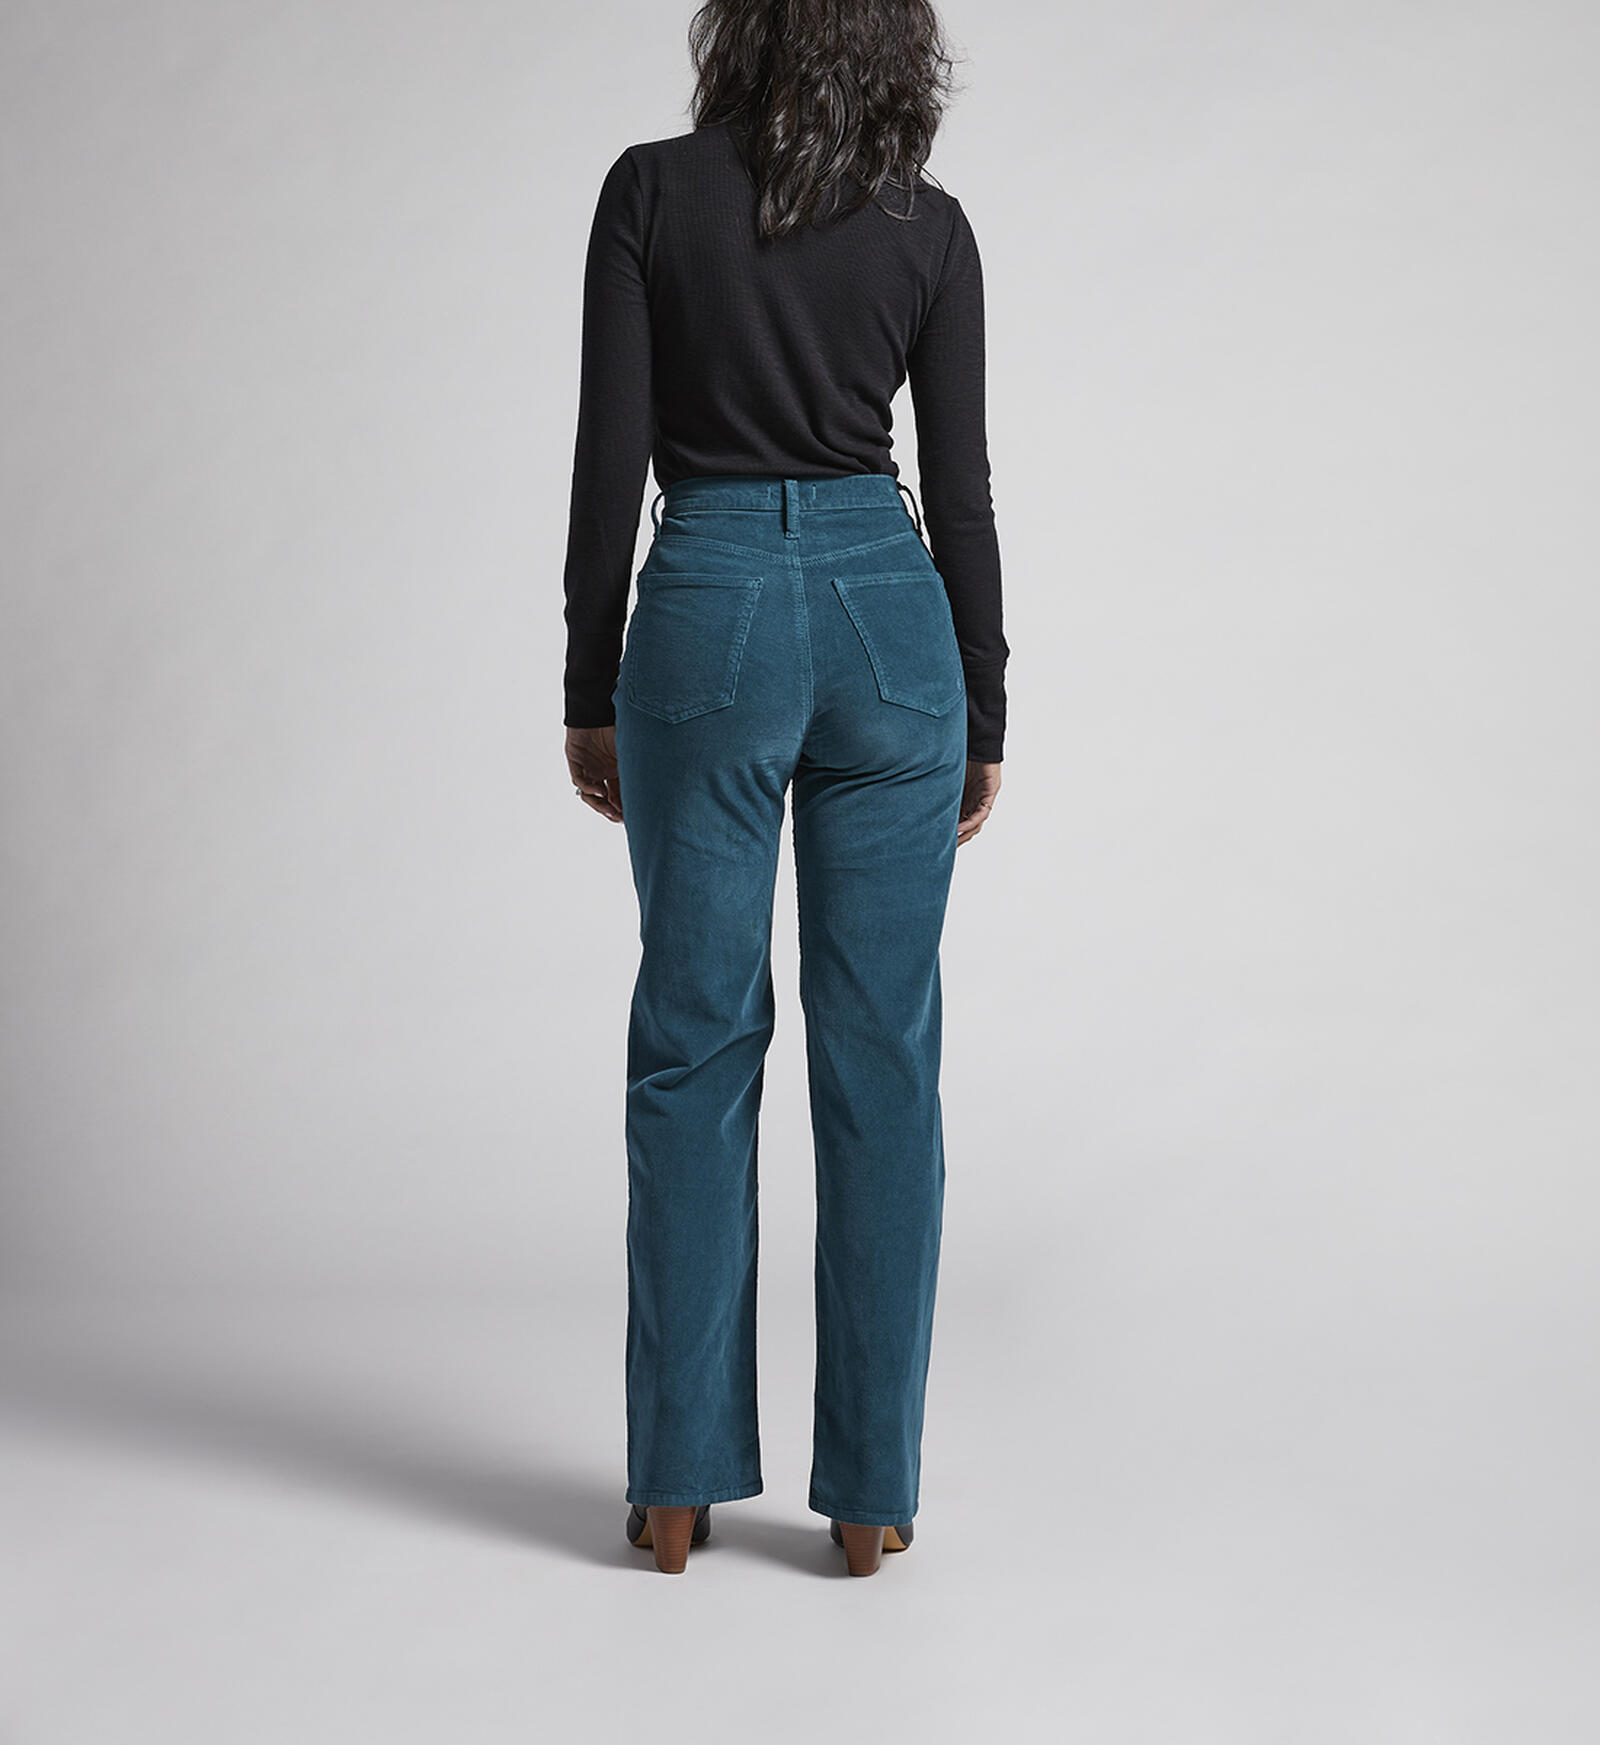 Women's Corduroy Pants High Waist Button Zip Wide Leg Pants